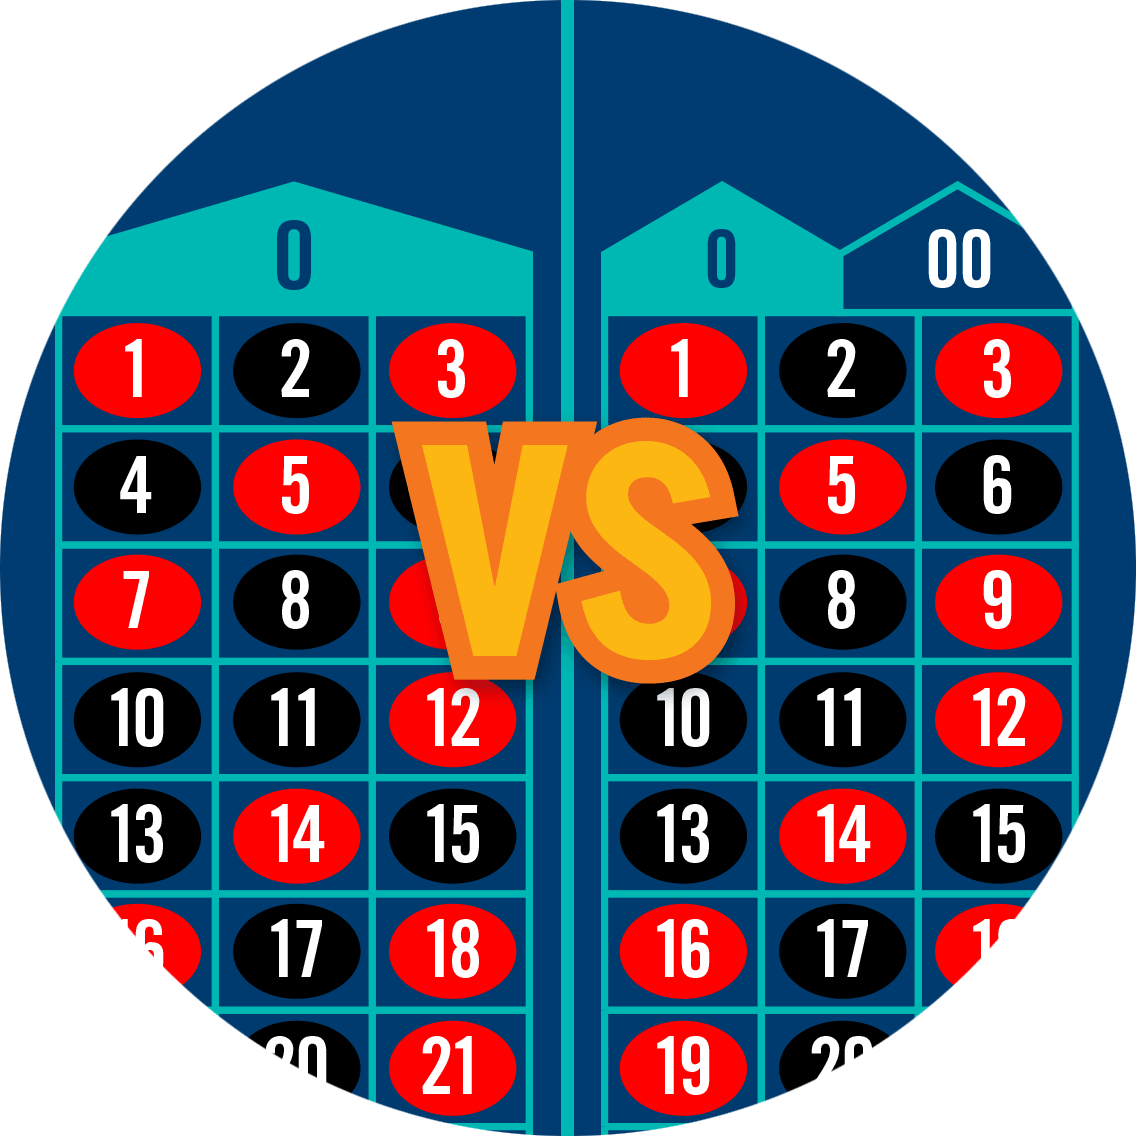 A European roulette table vs. an American roulette table.